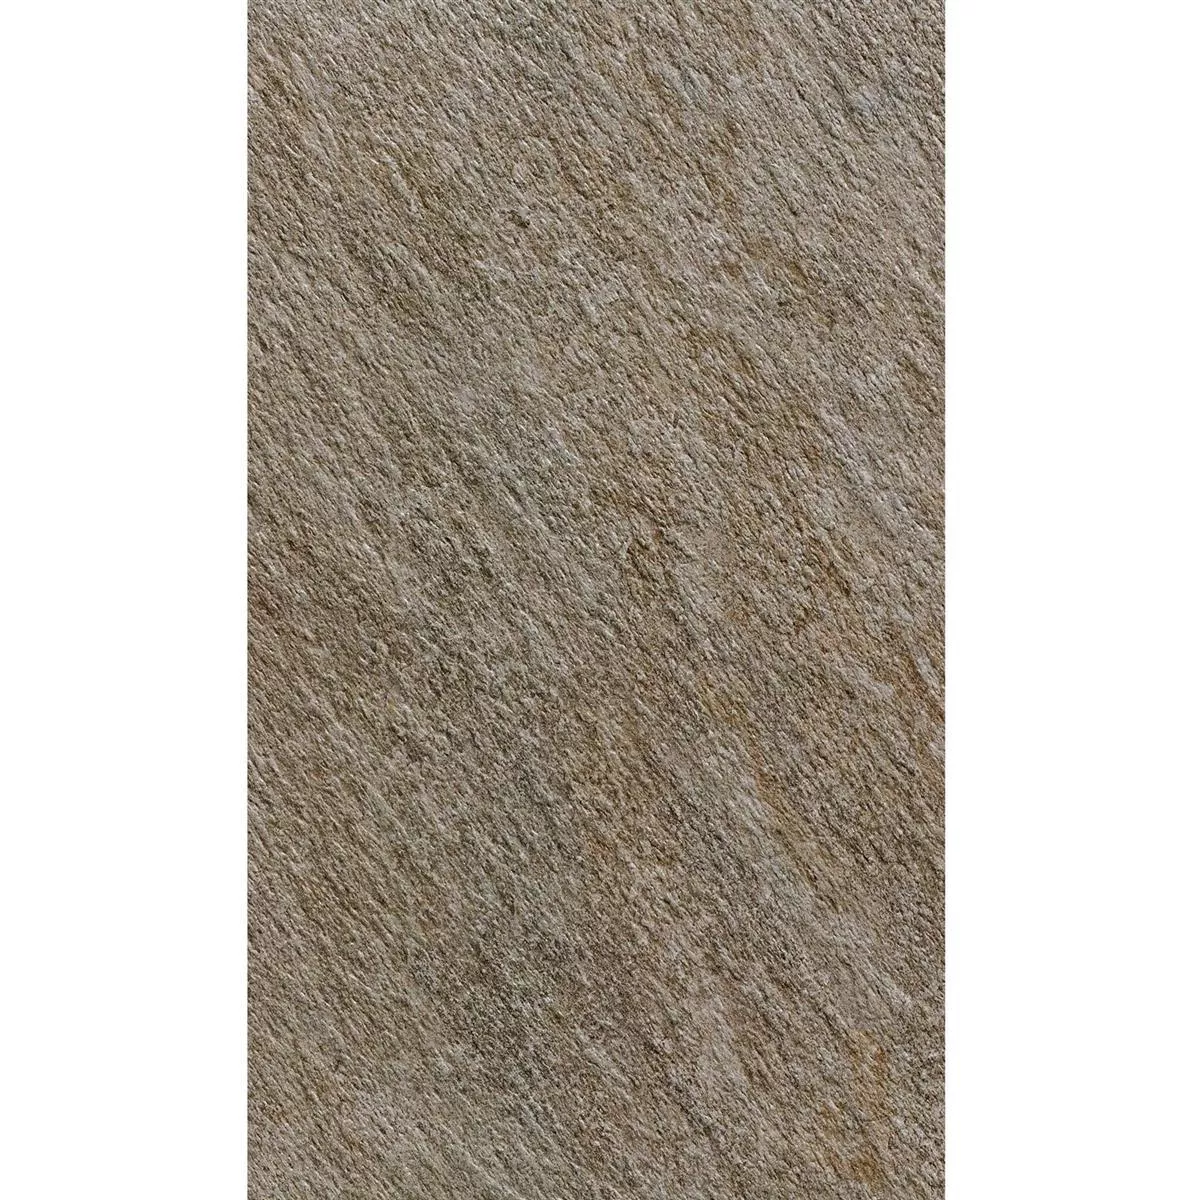 Sample Terrace Tiles Stoneway Natural Stone Optic Dark Grey 60x90cm